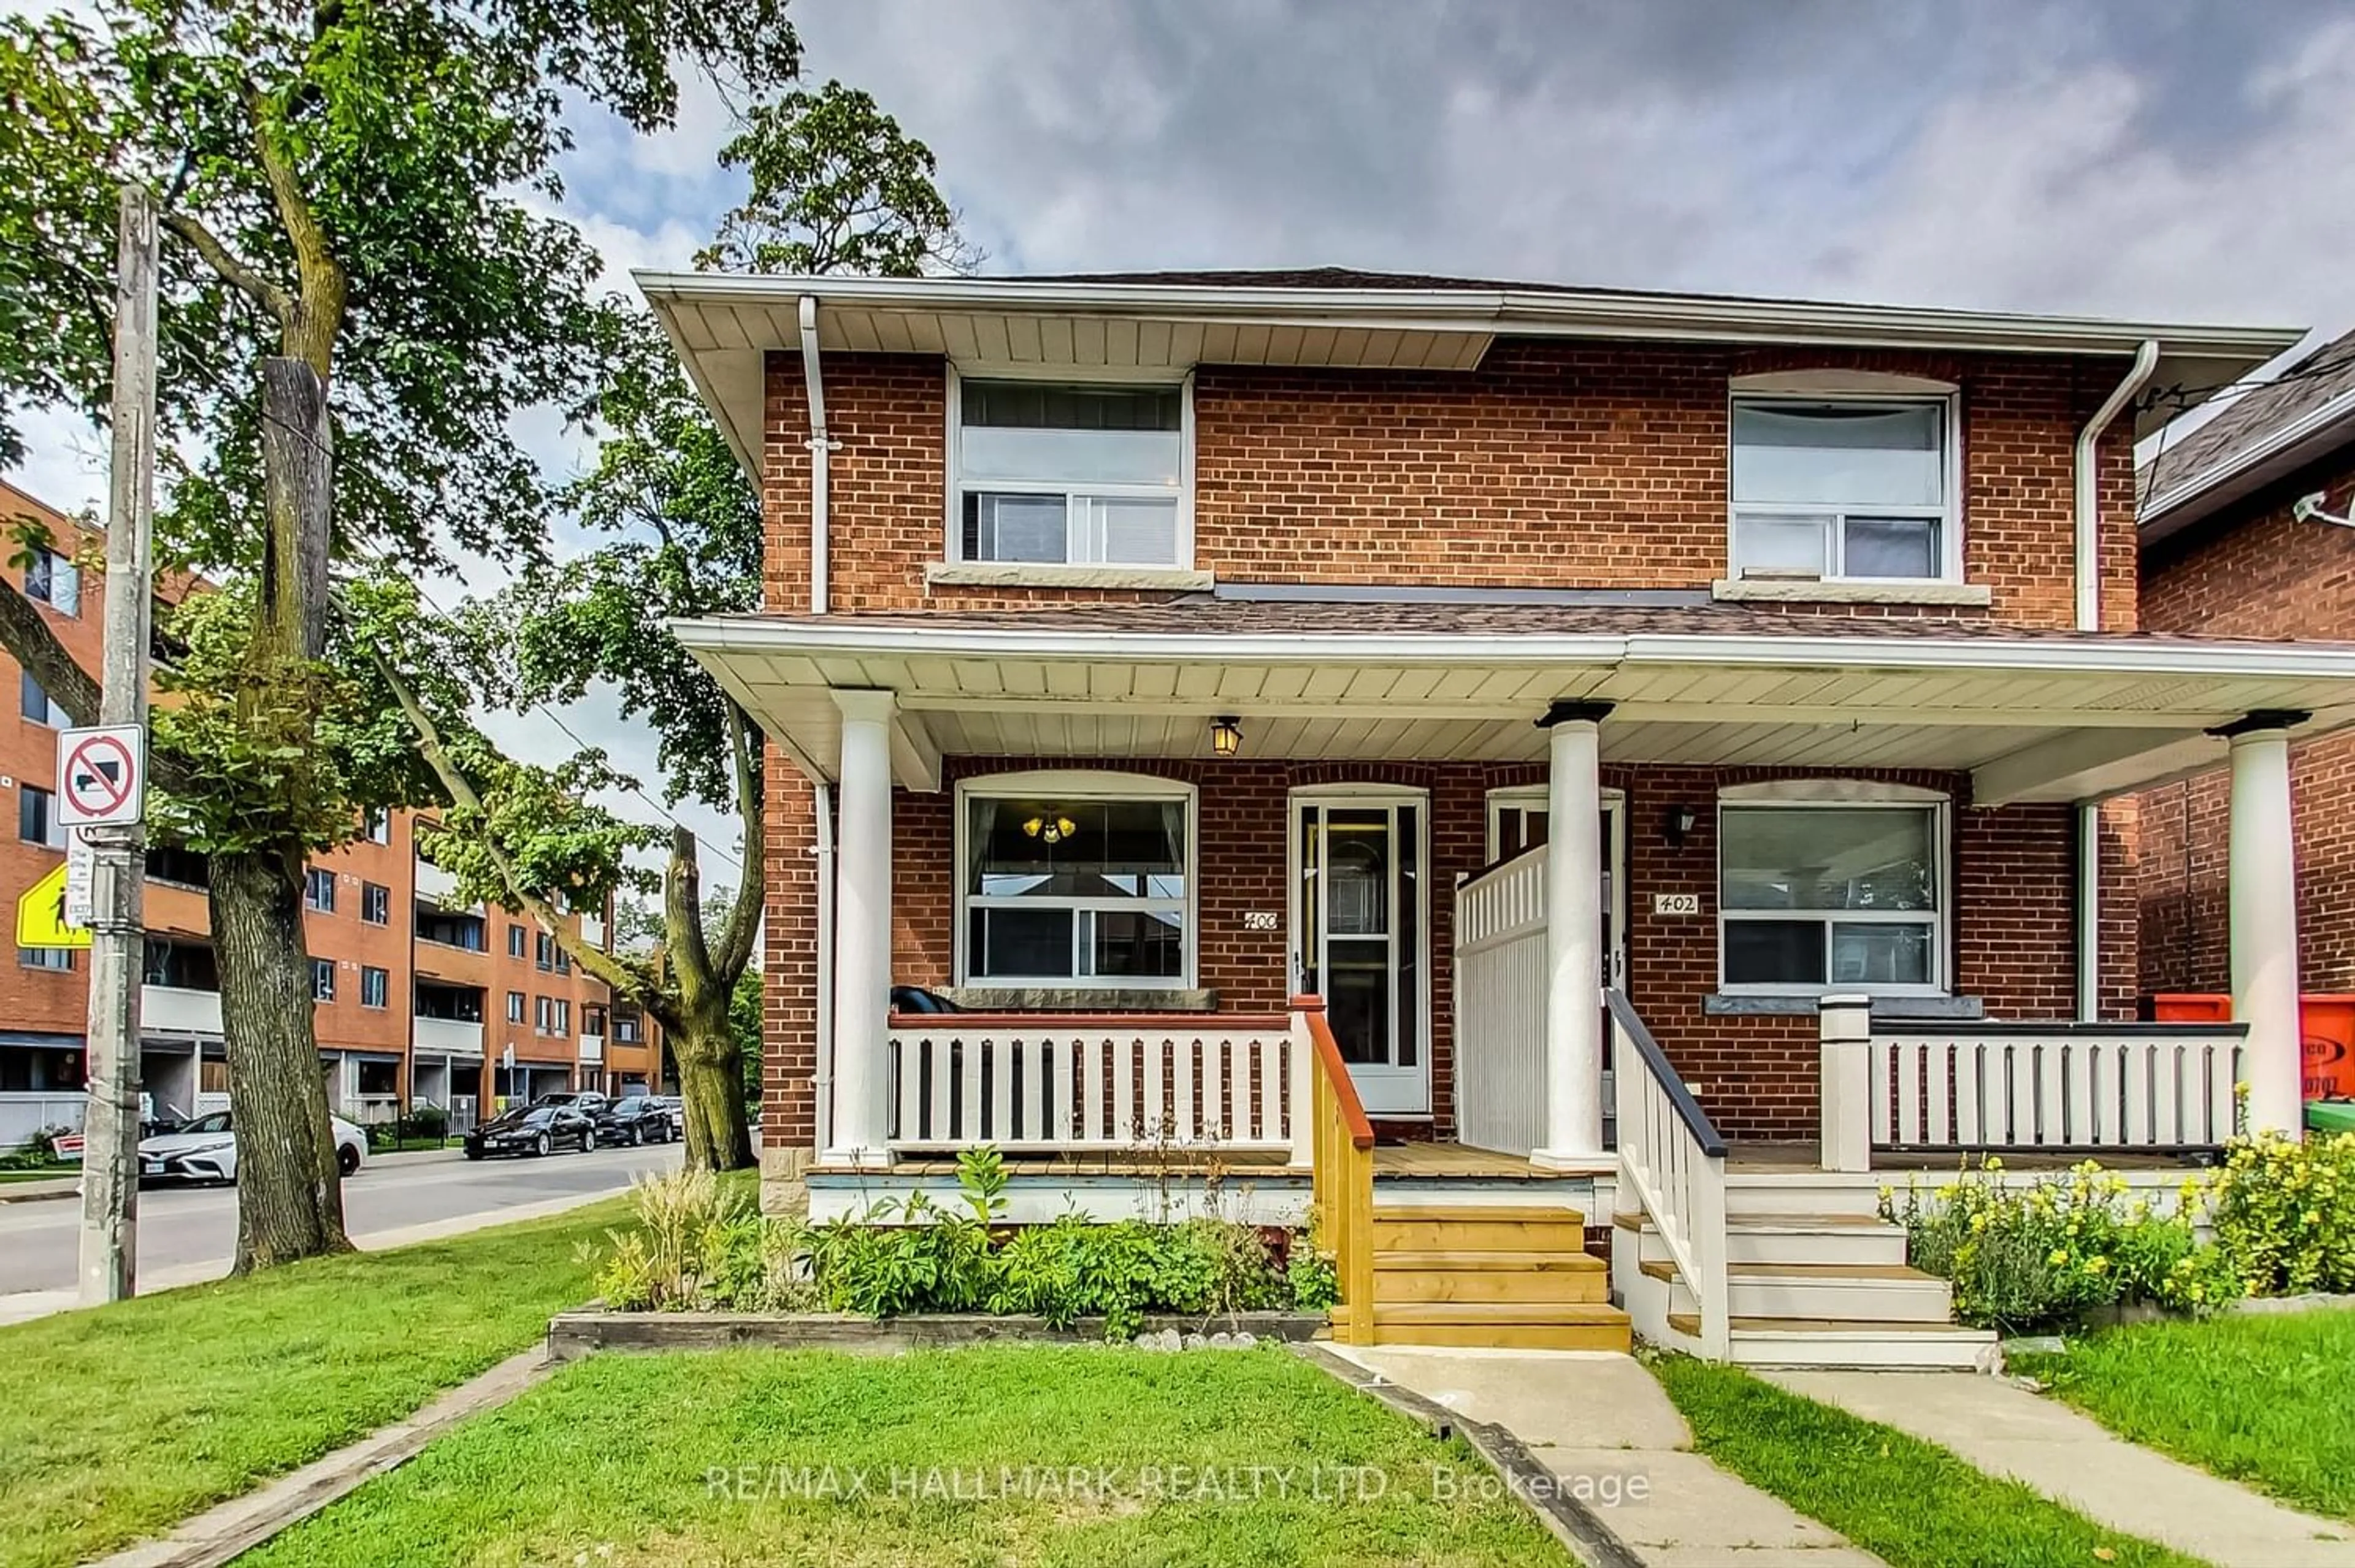 Home with brick exterior material for 400 Christie St, Toronto Ontario M6G 3C6